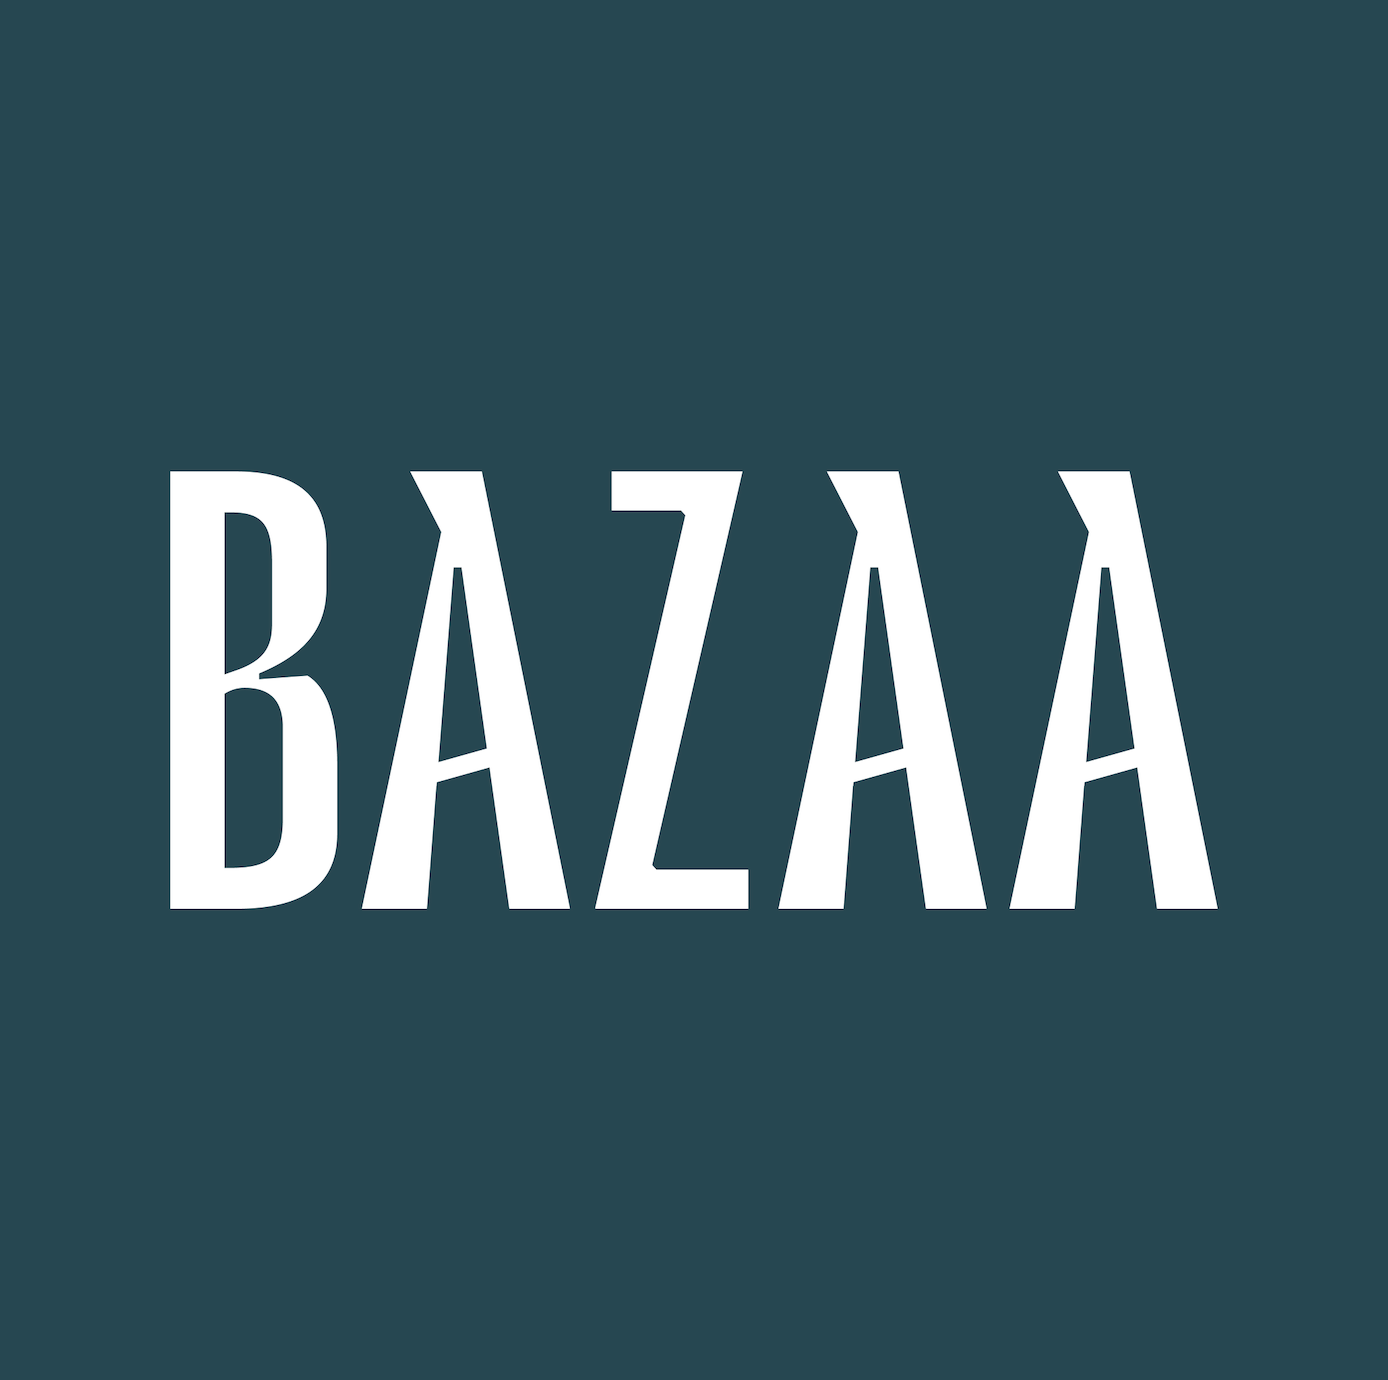 Bazaa | Home of Unique Vintage & Antique Furniture & Home Decor